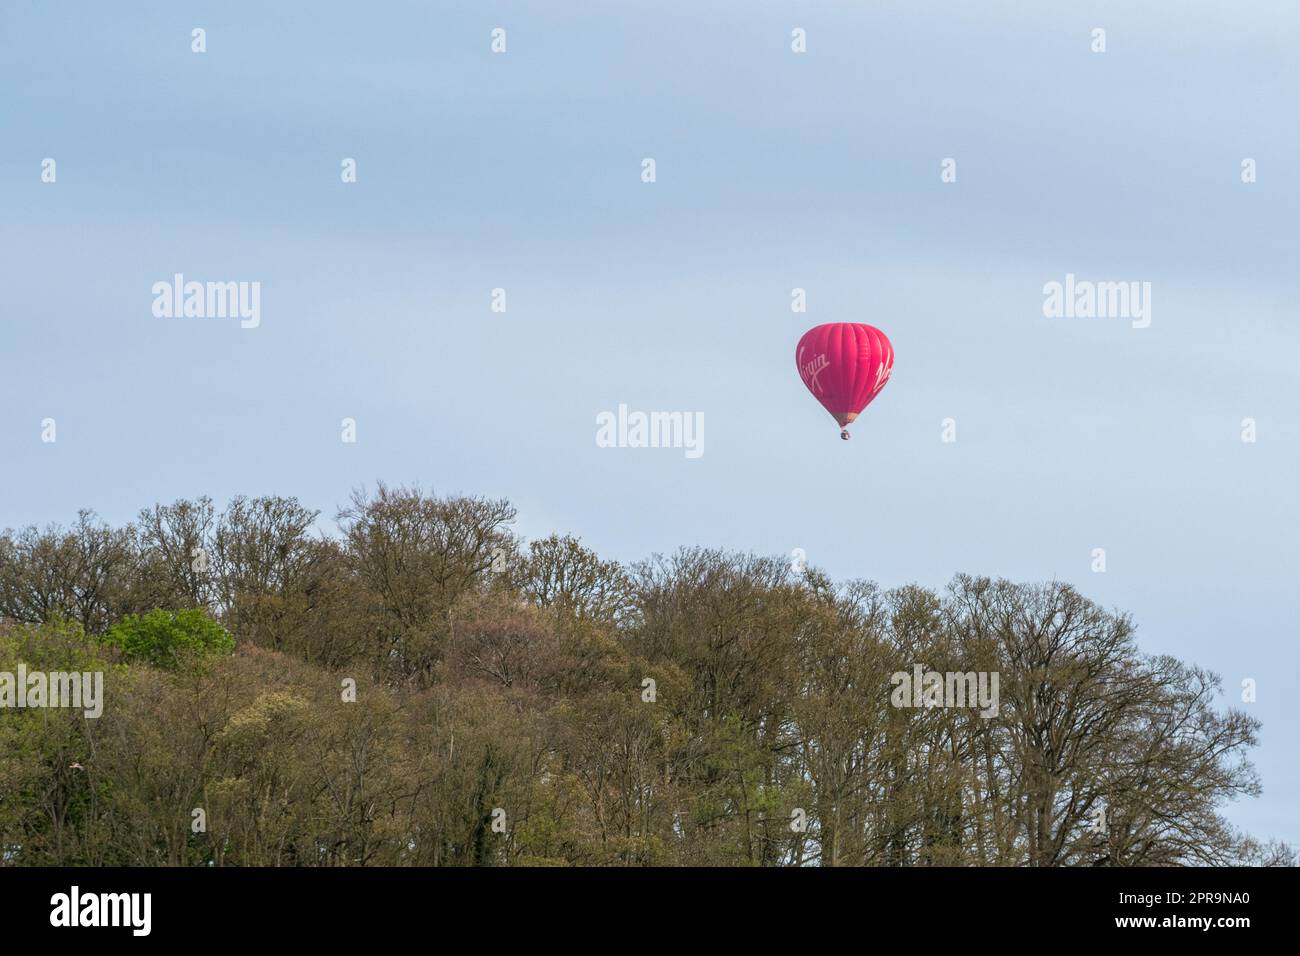 Long shot of a Virgin Balloon Flights hot air ballon near Henley-on-Thames, UK. Stock Photo